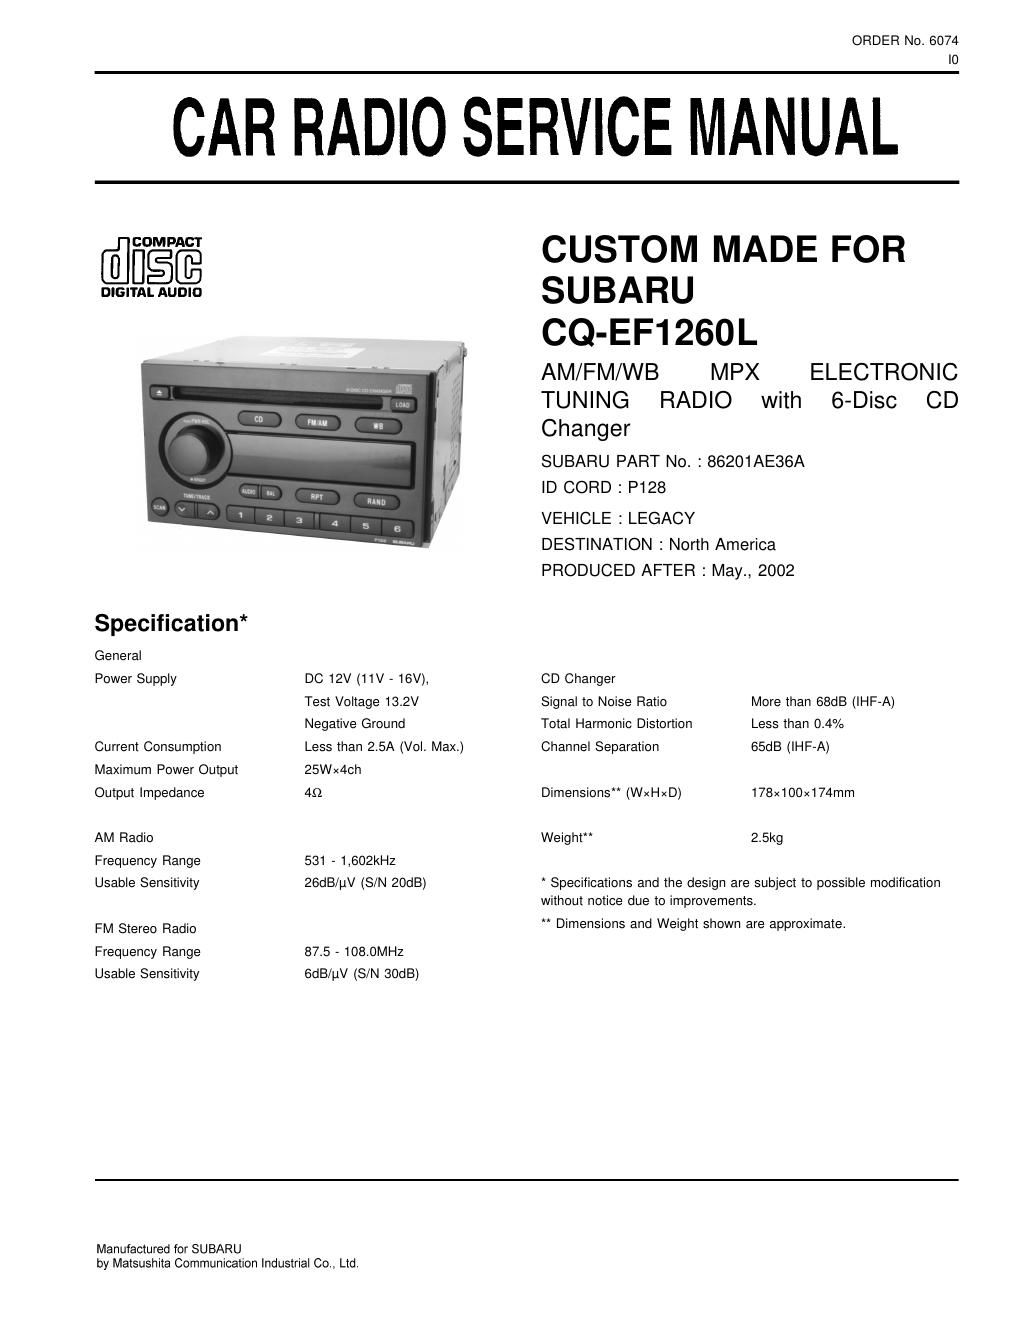 panasonic cq ef 1260 l service manual